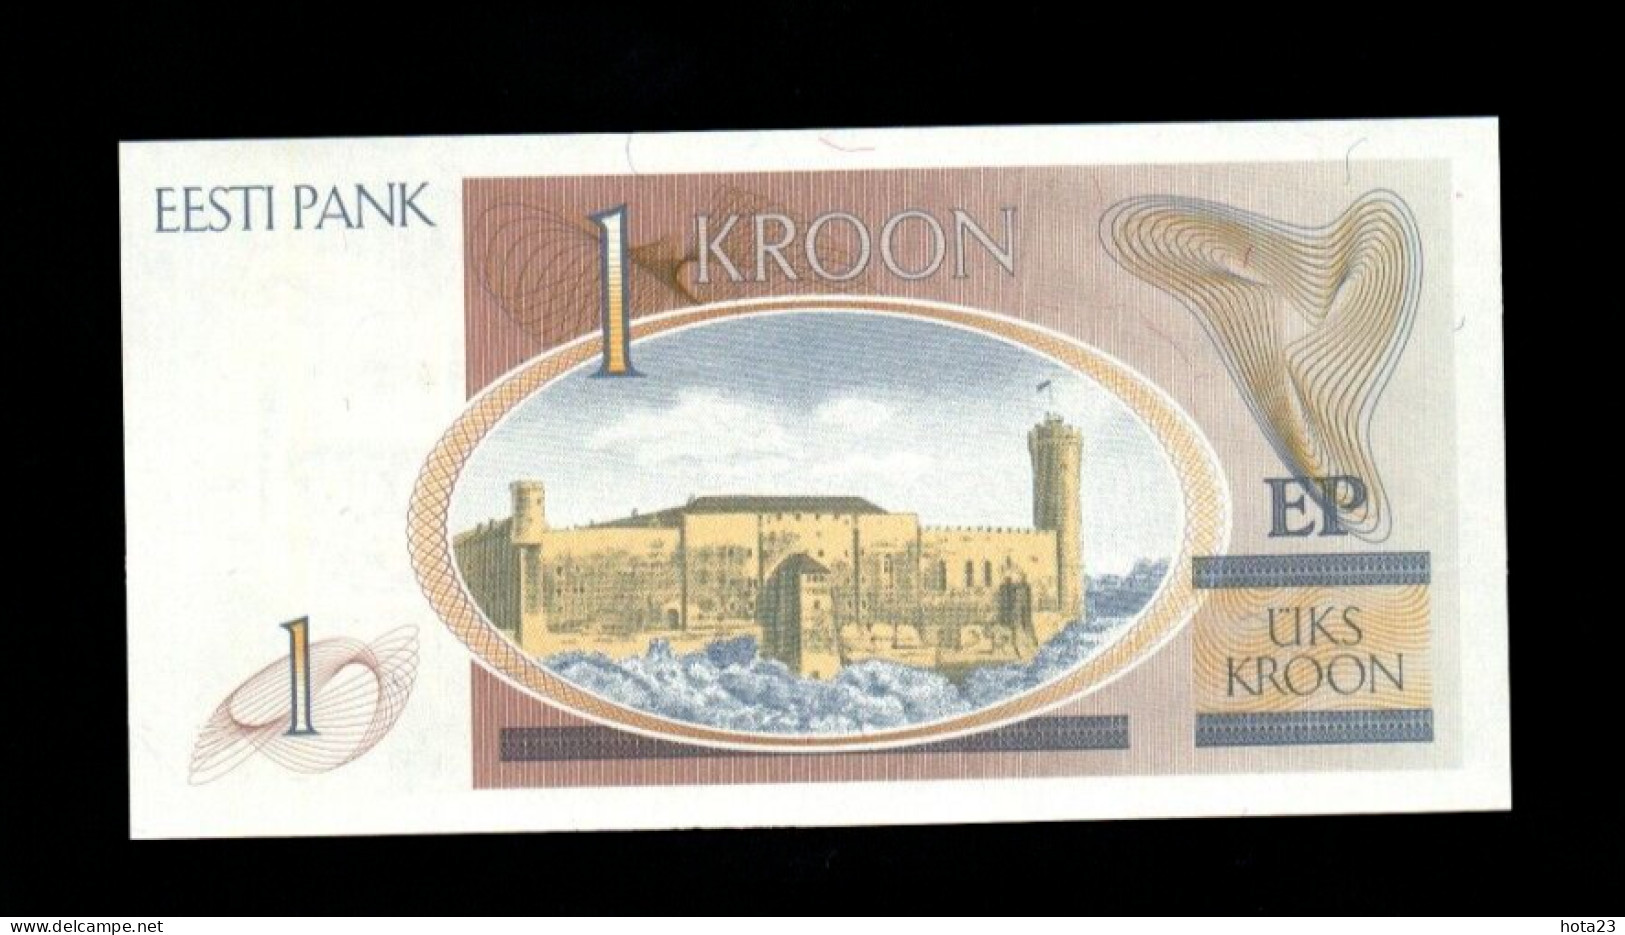 1 KROON UNC BANKNOTE FROM ESTONIA 1992 PICK-69 - Estonia